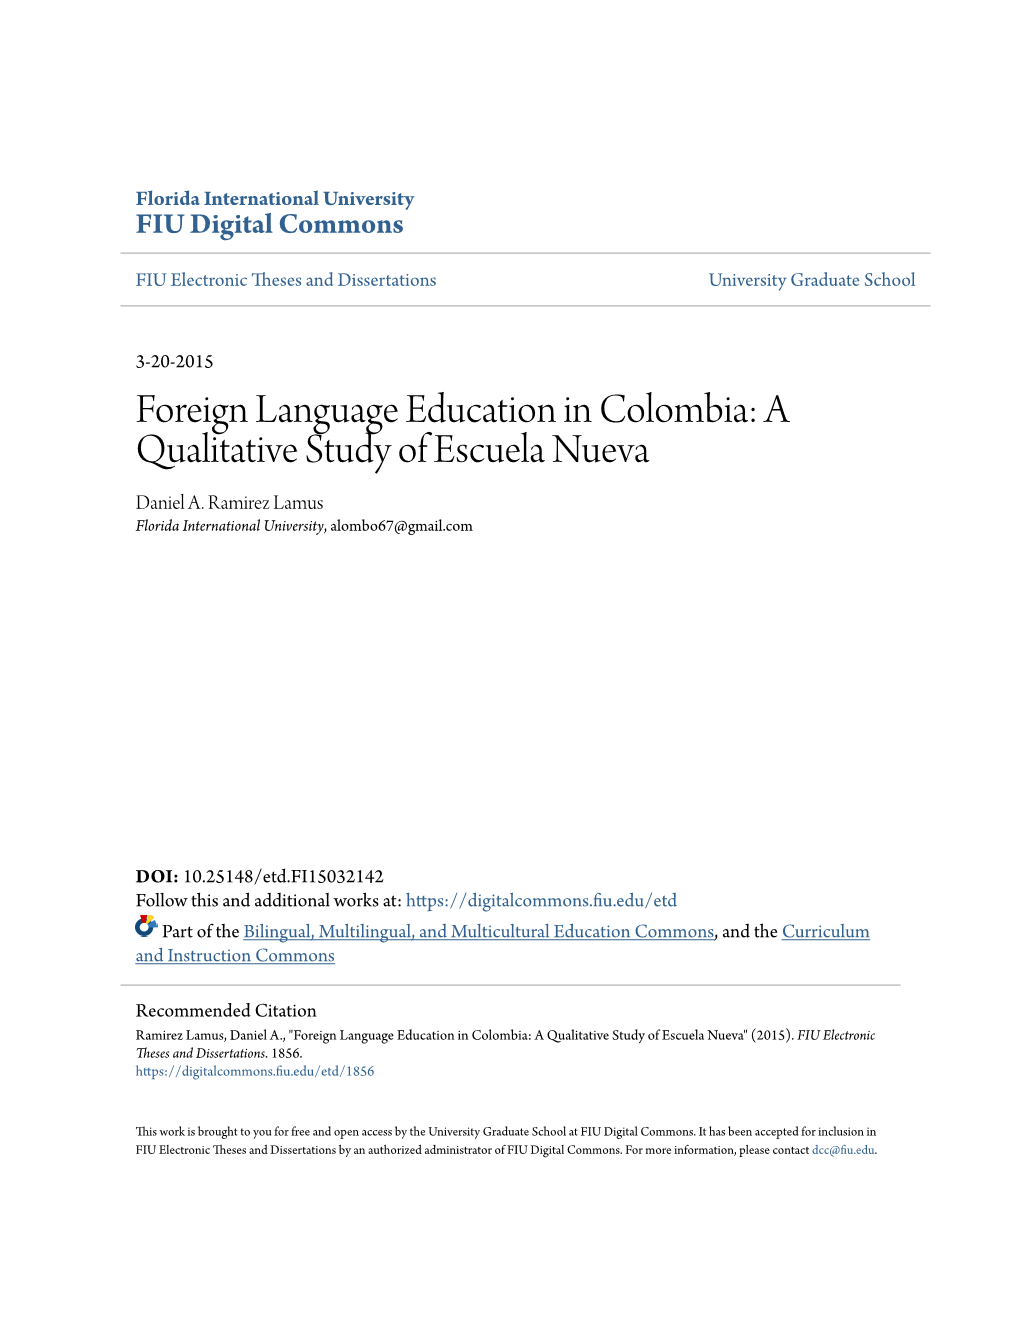 Foreign Language Education in Colombia: a Qualitative Study of Escuela Nueva Daniel A